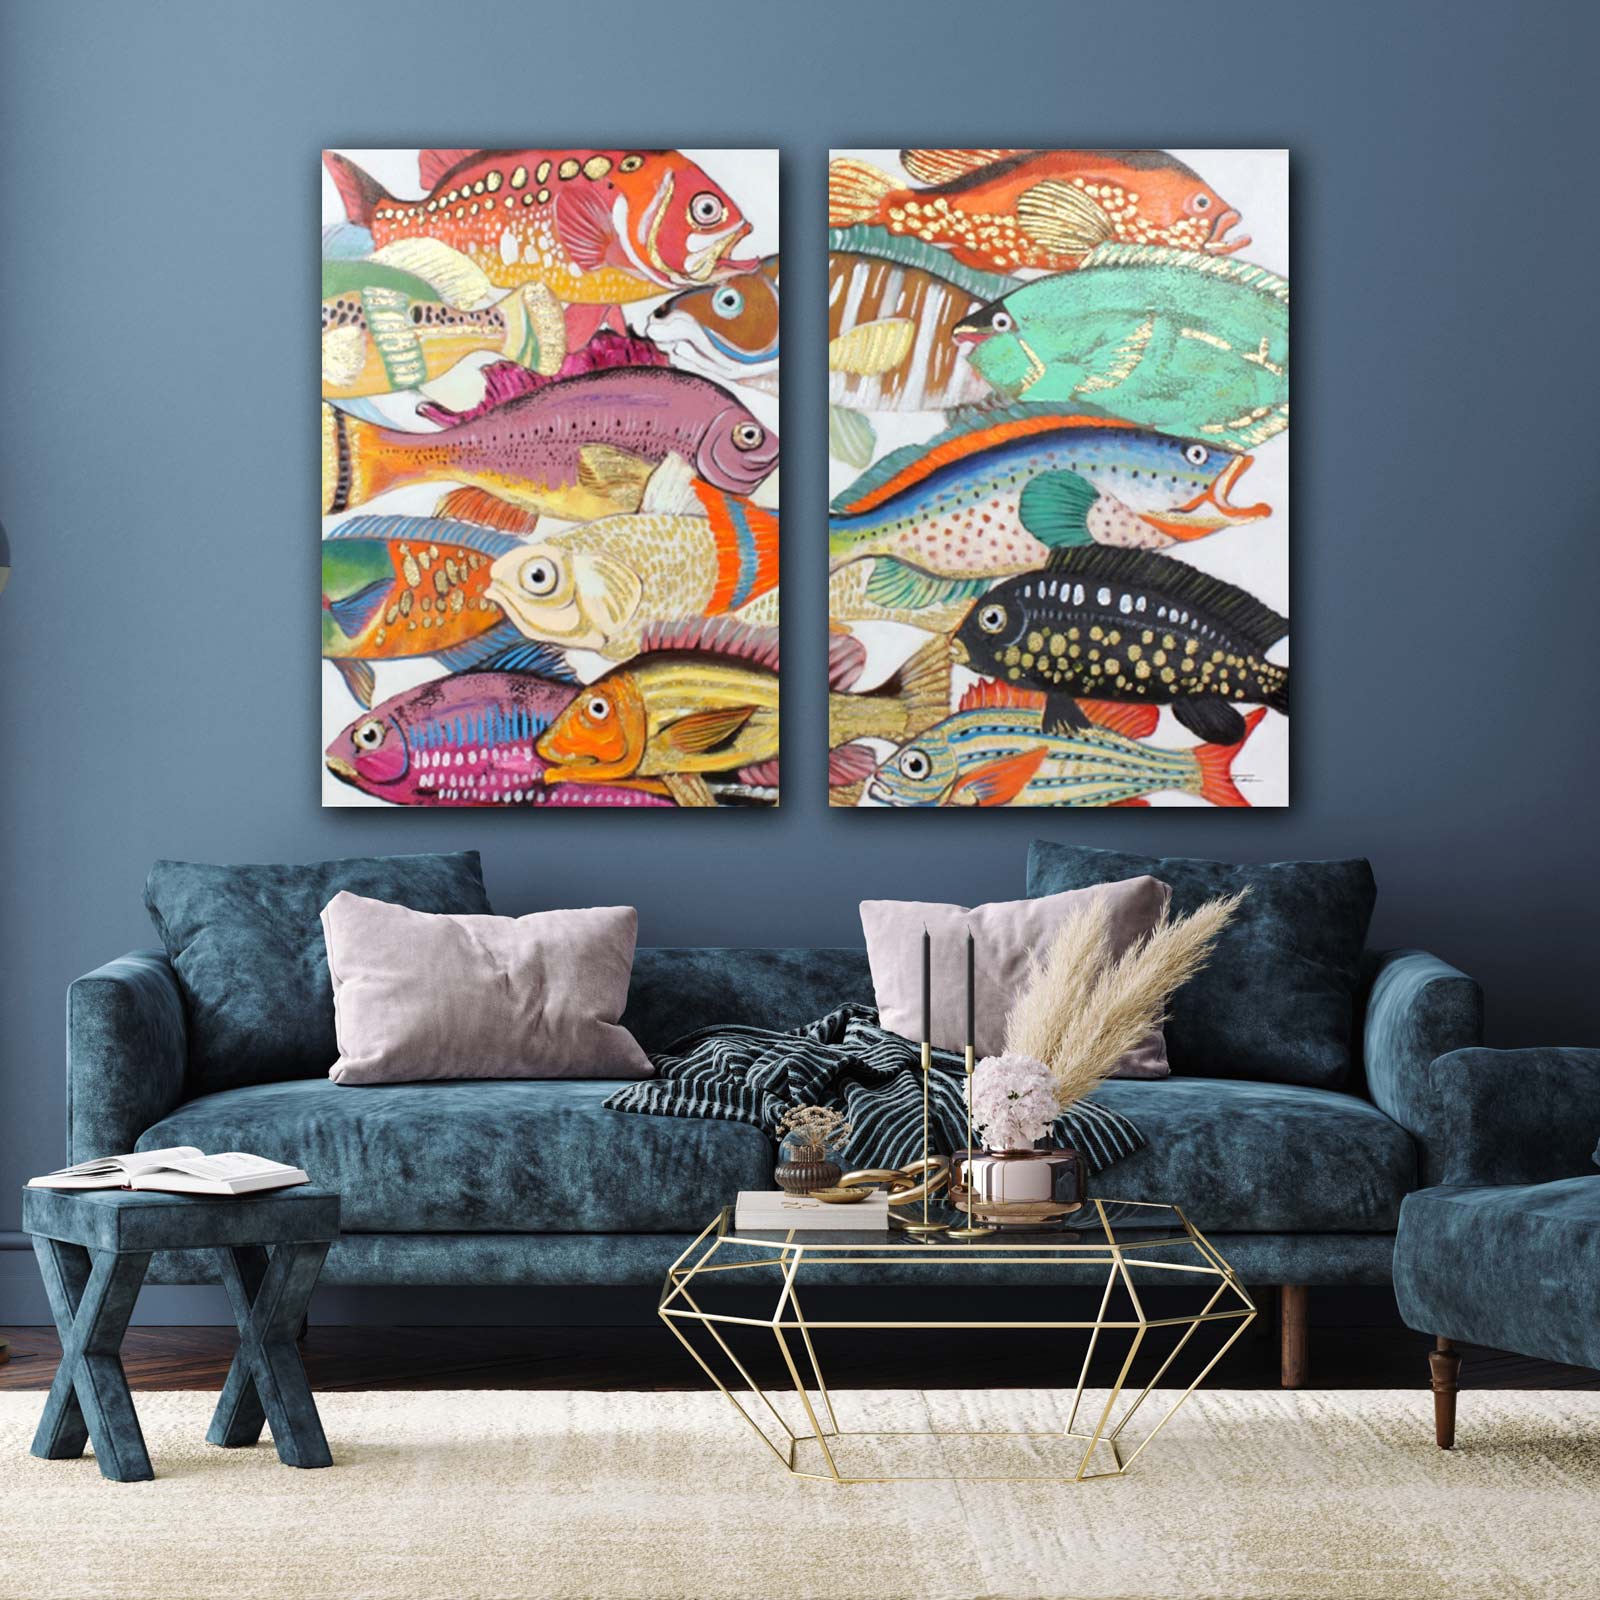 Juego de 2 cuadros de peces Peces de colores, pintados a mano, acrílico sobre lienzo, 70x100 cm